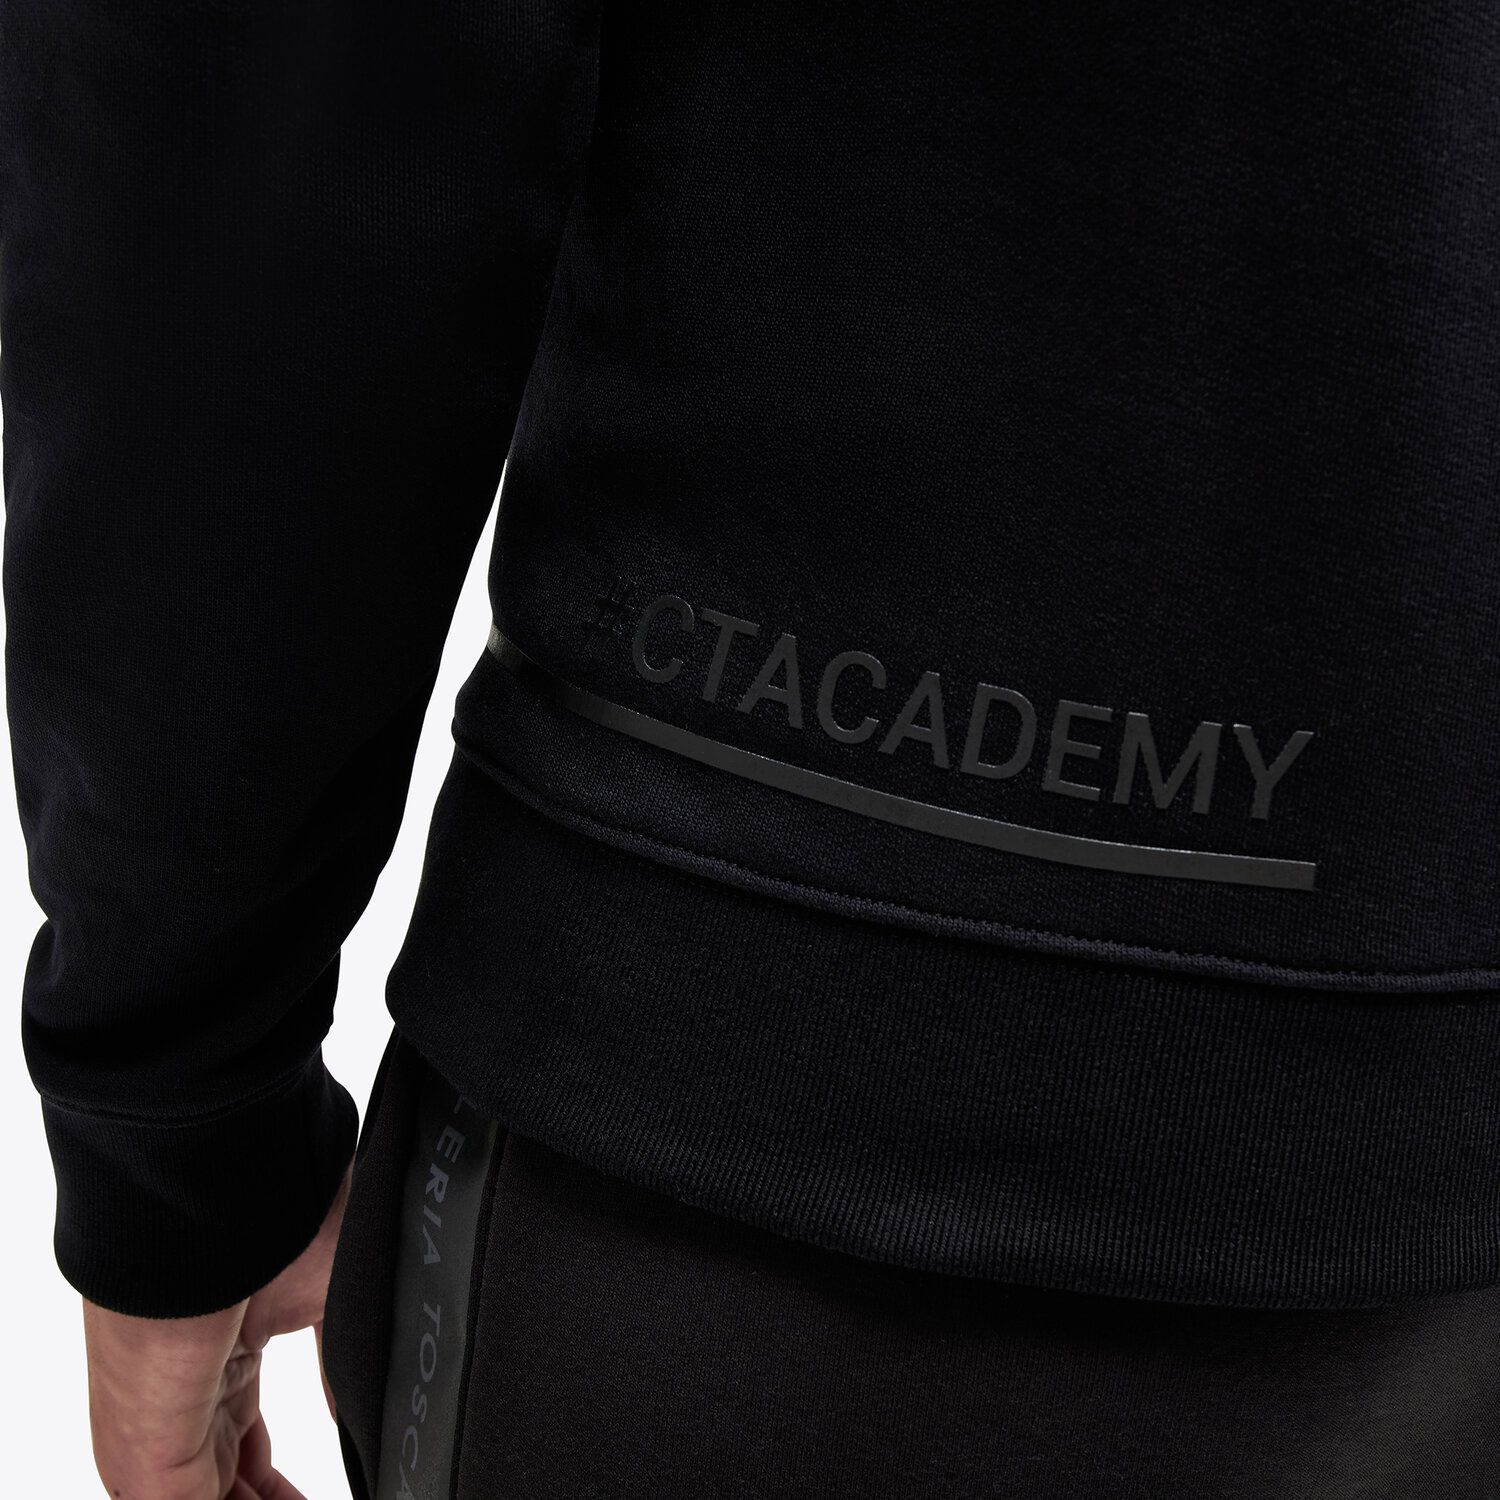 Cavalleria Toscana CT Academy men's cotton crew neck sweatshirt BLACK-8